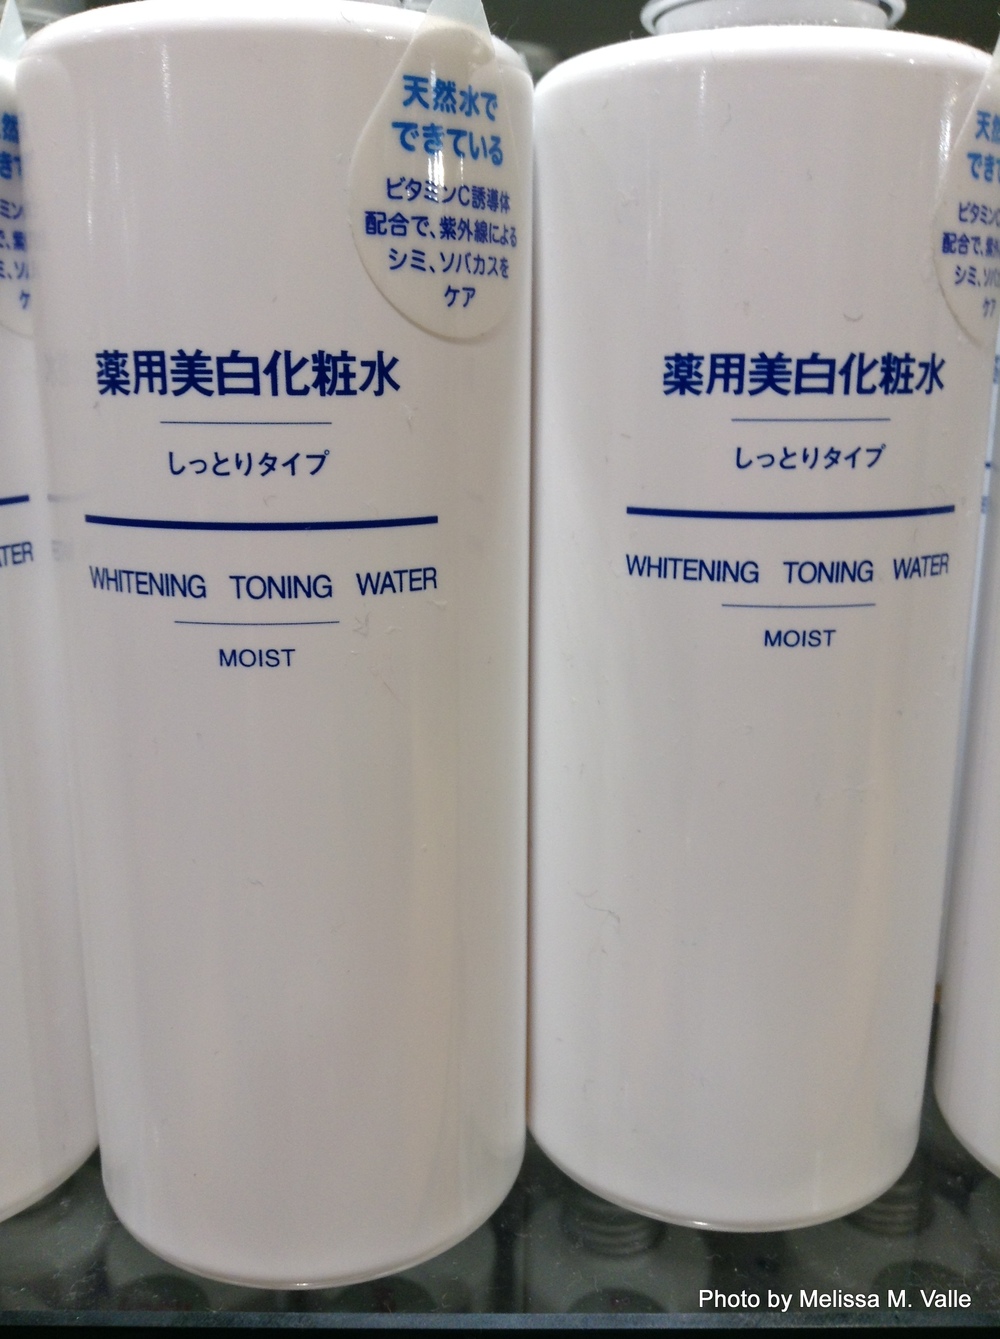 7.21.14 Tokyo, Japan- Ginza, Muji whitening products (2).JPG